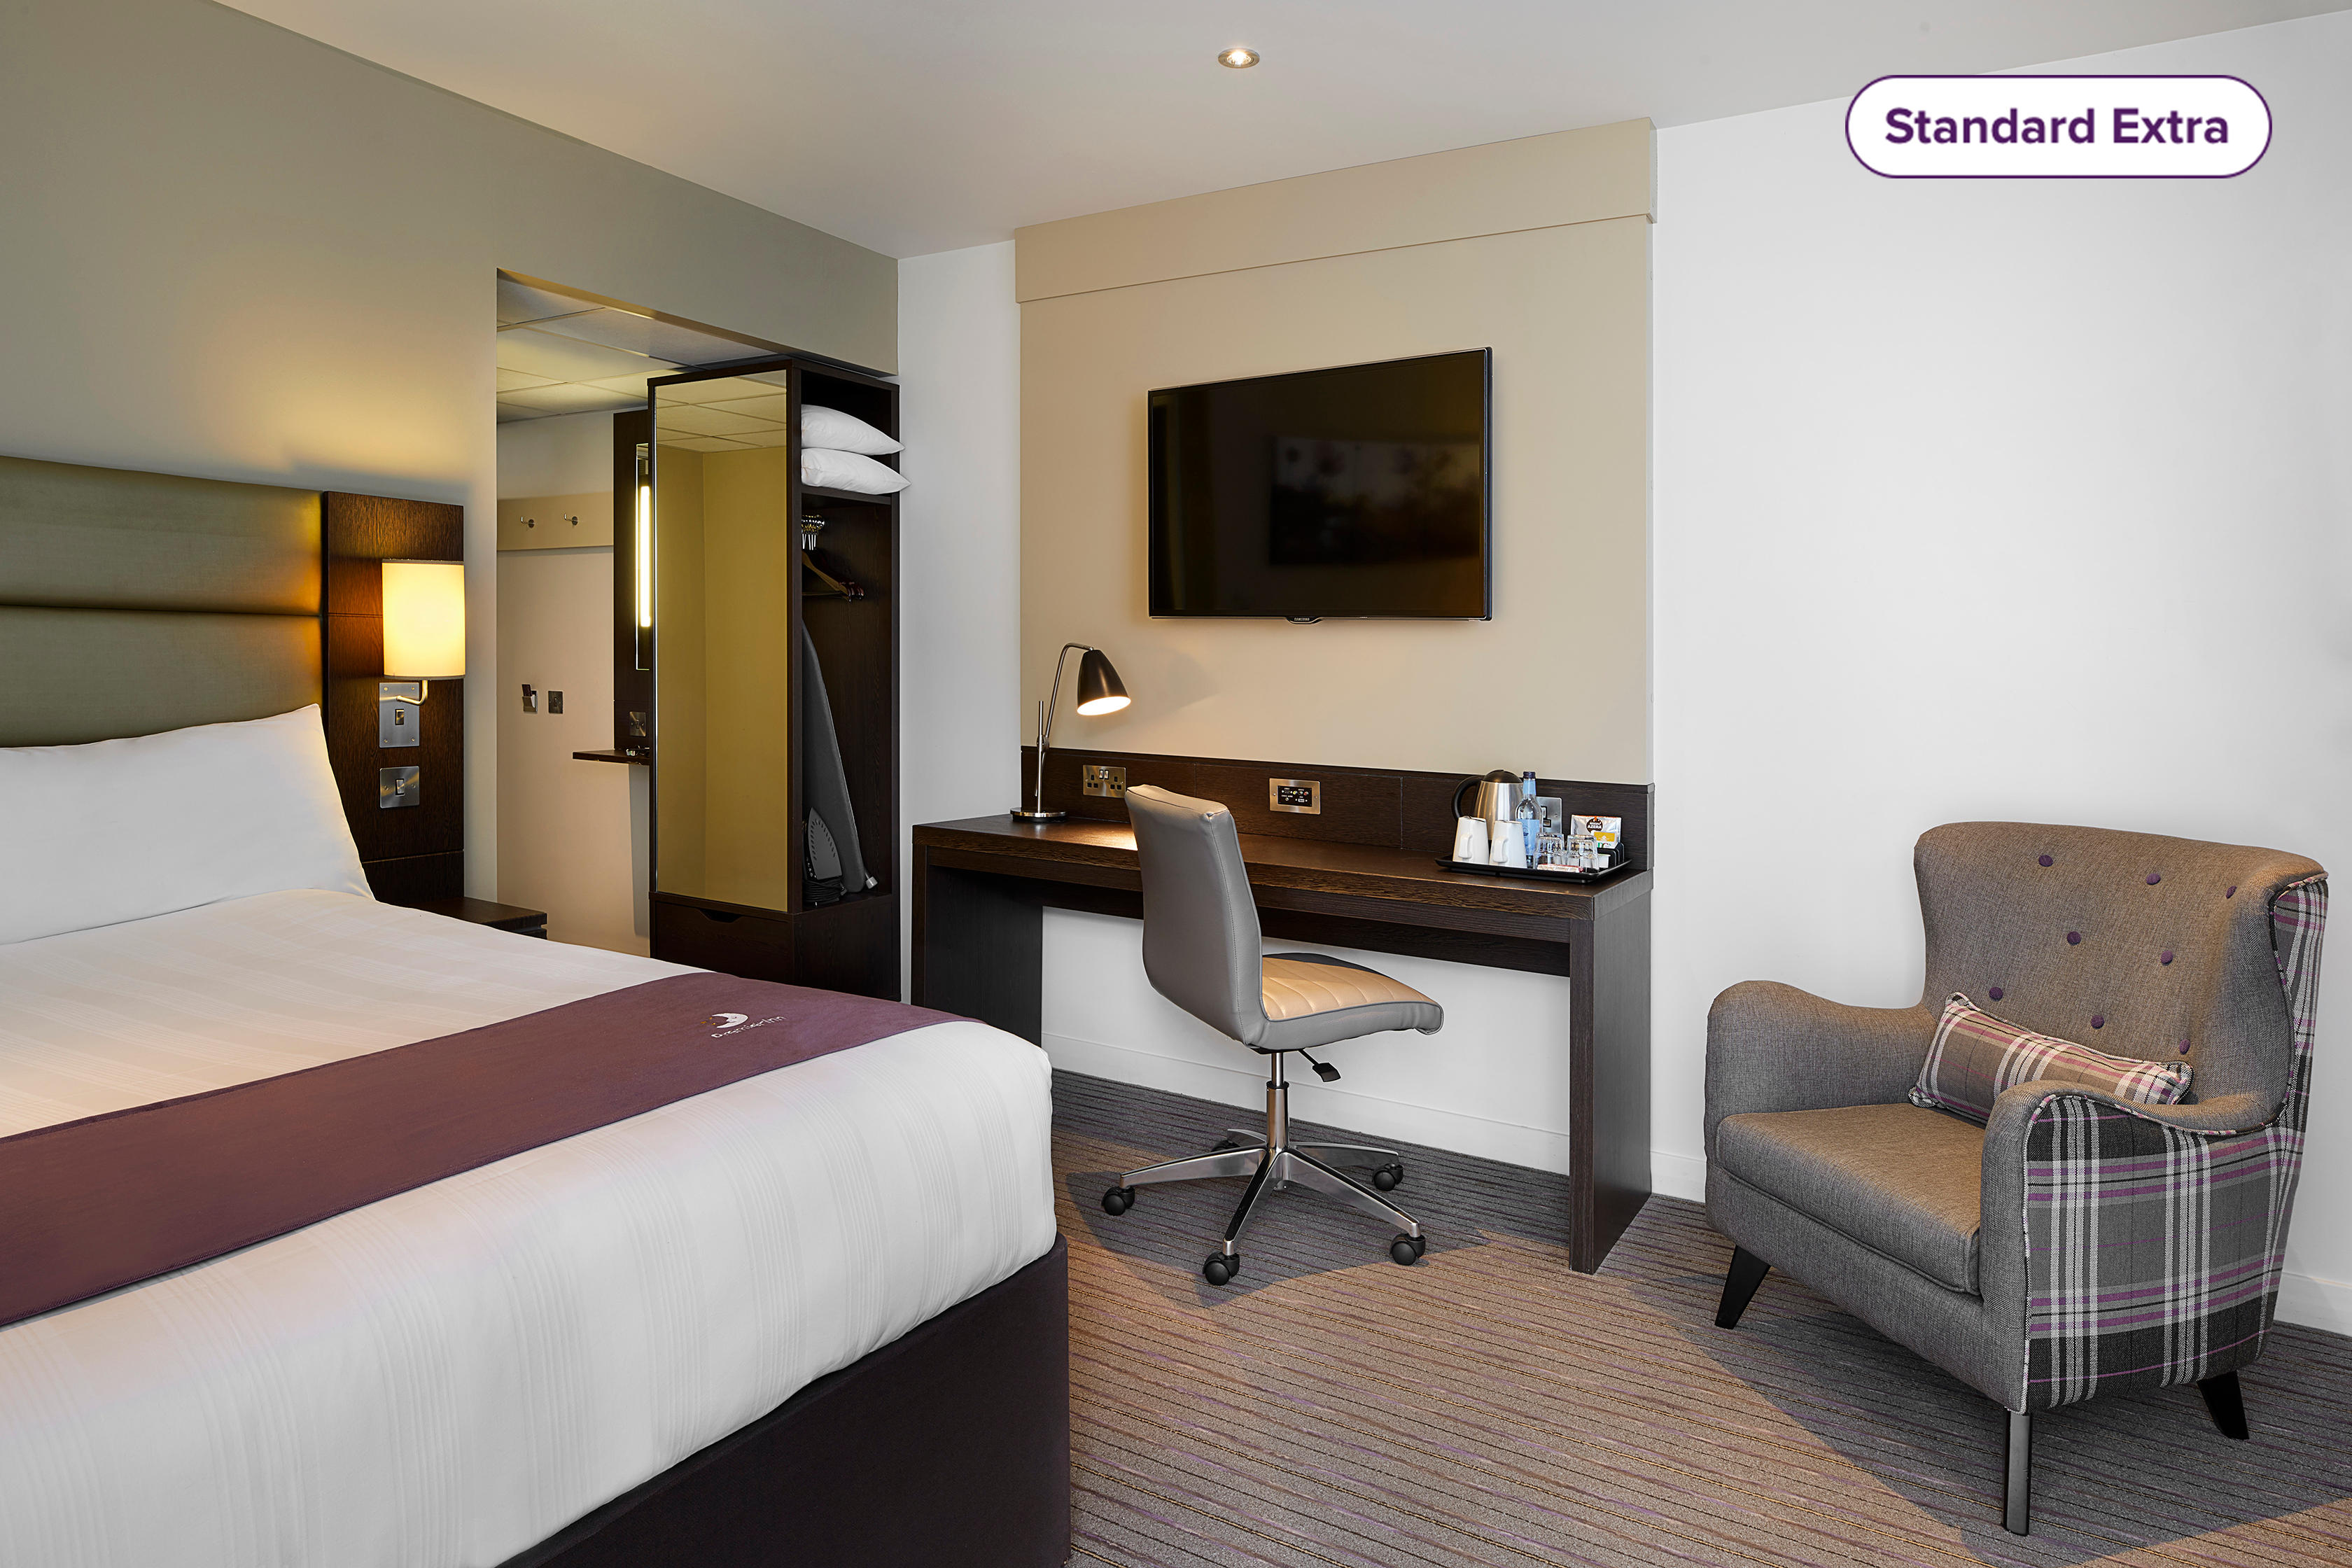 Standard Extra Bedroom Premier Inn Newcastle City Centre Millennium Bridge hotel Newcastle upon Tyne 03333 211345